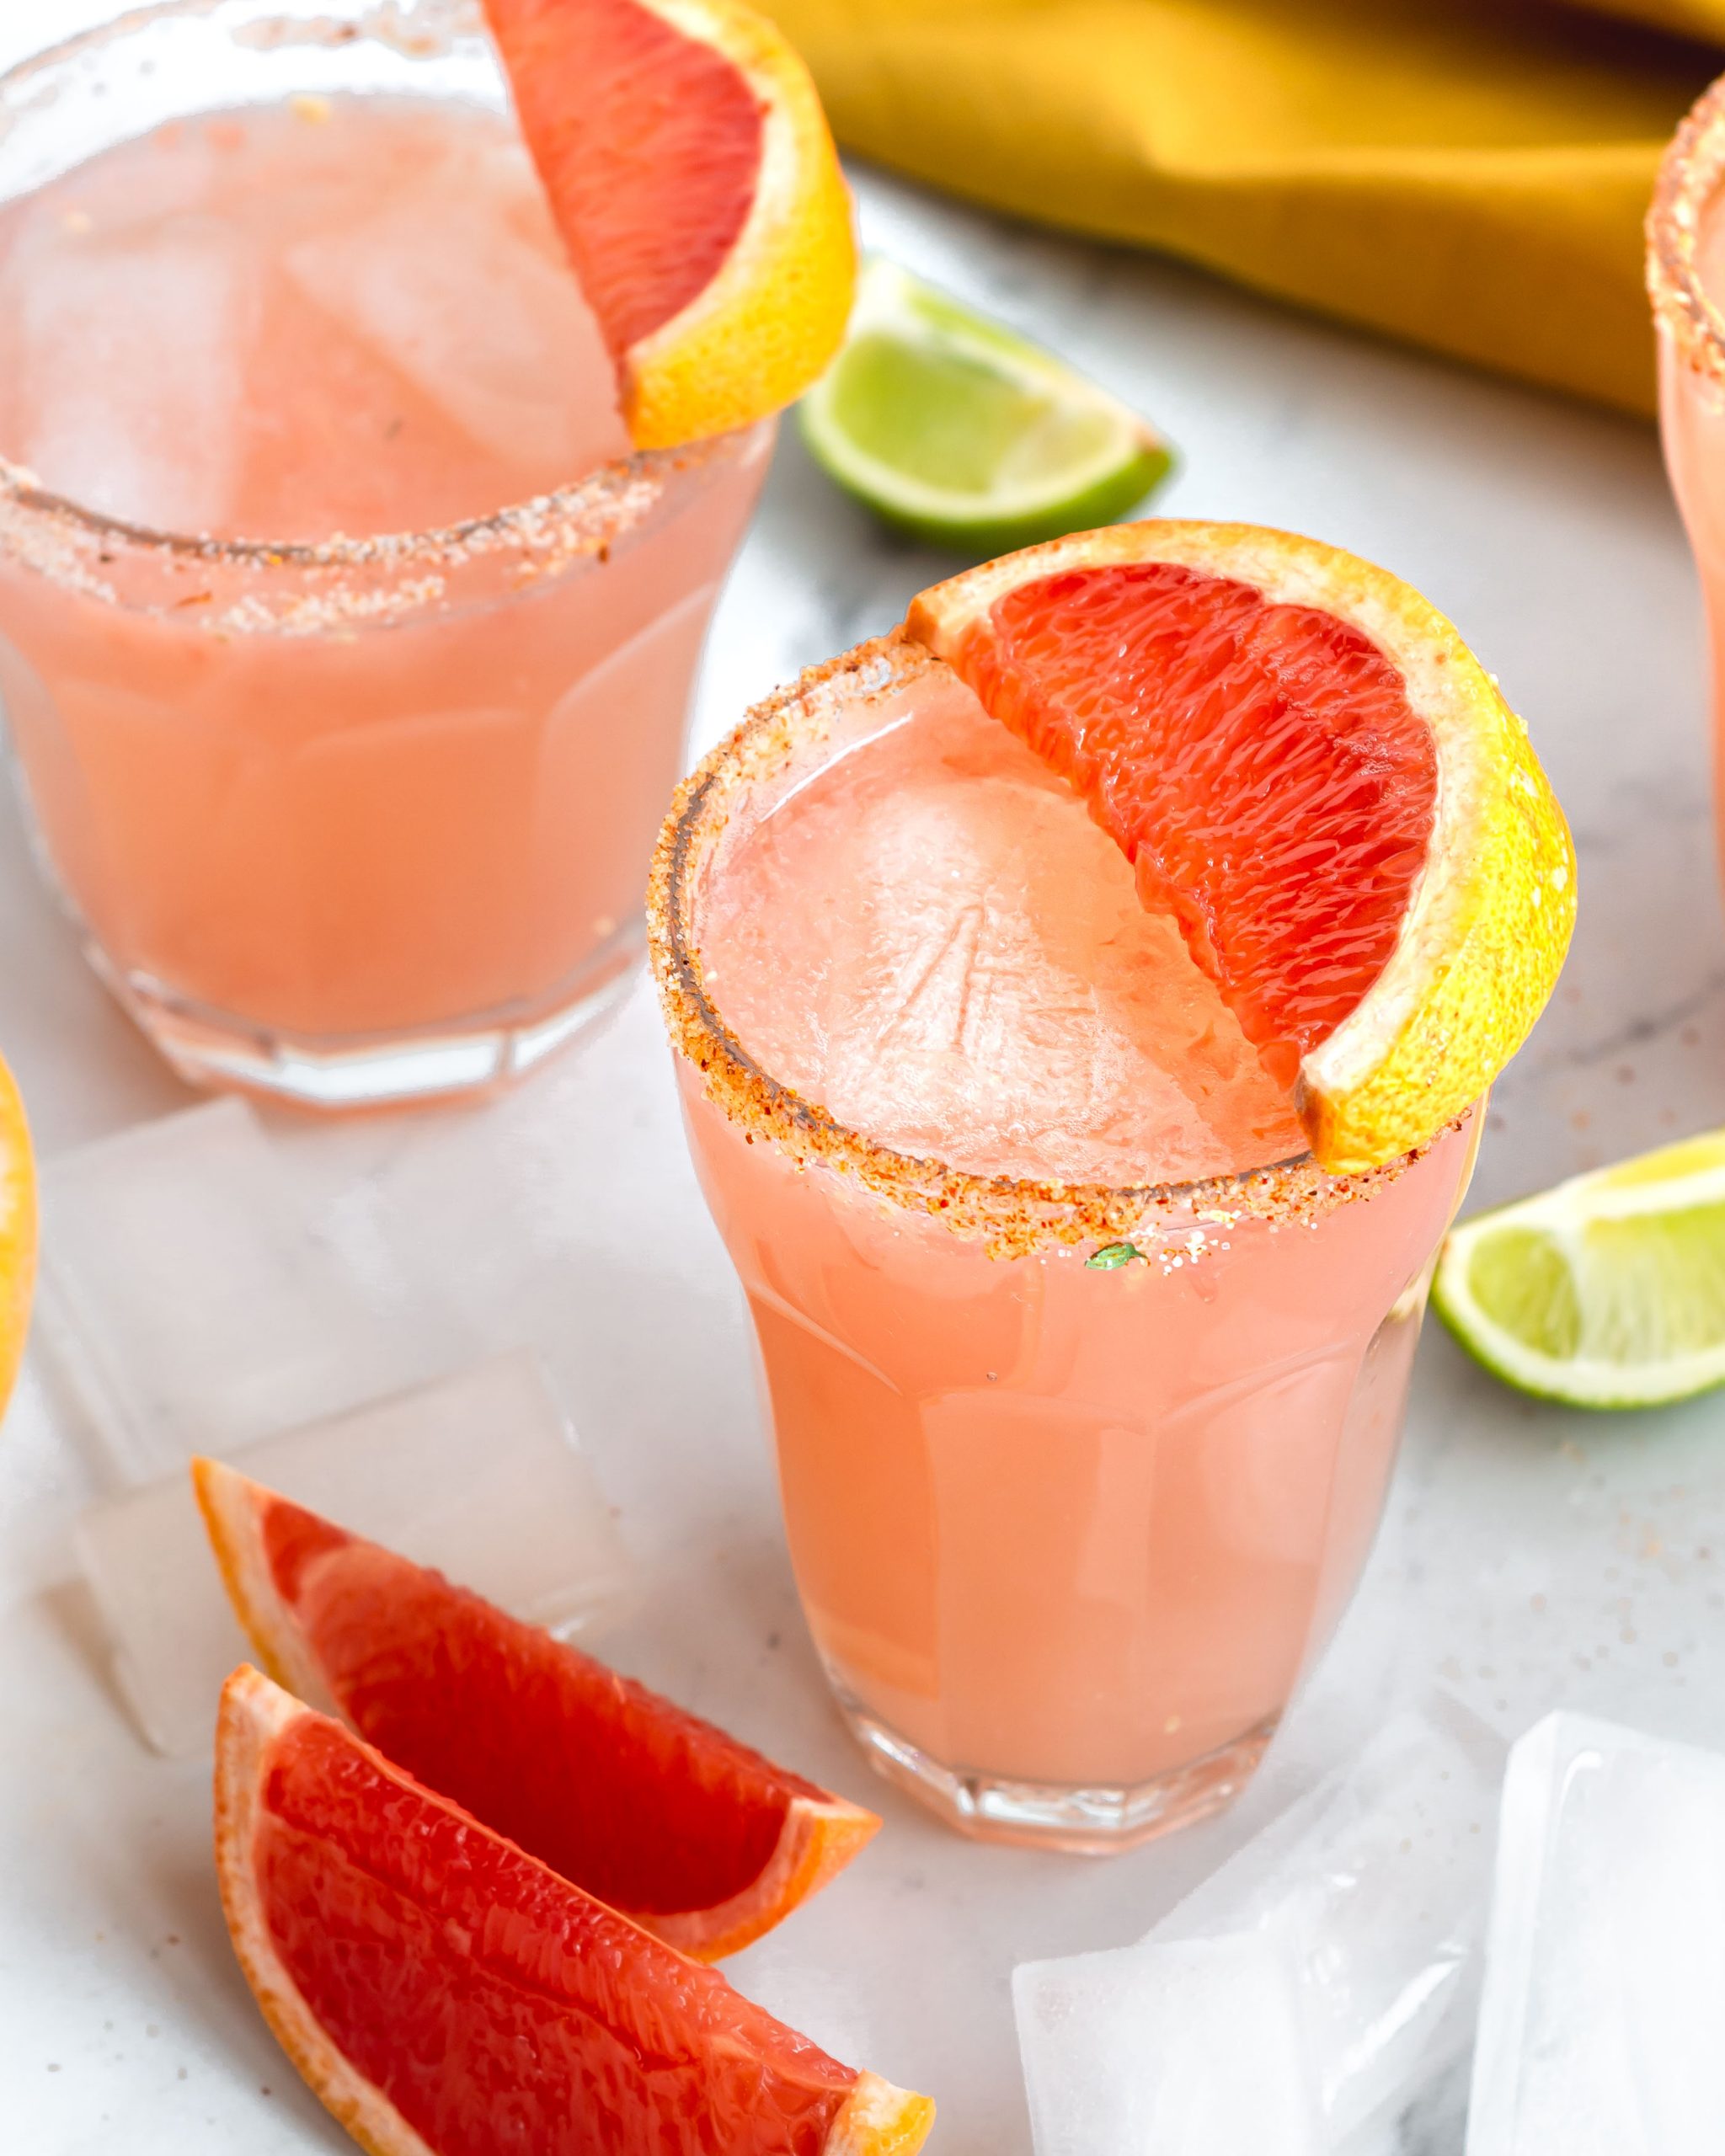 paloma drink with grapefruit slice as garnish.